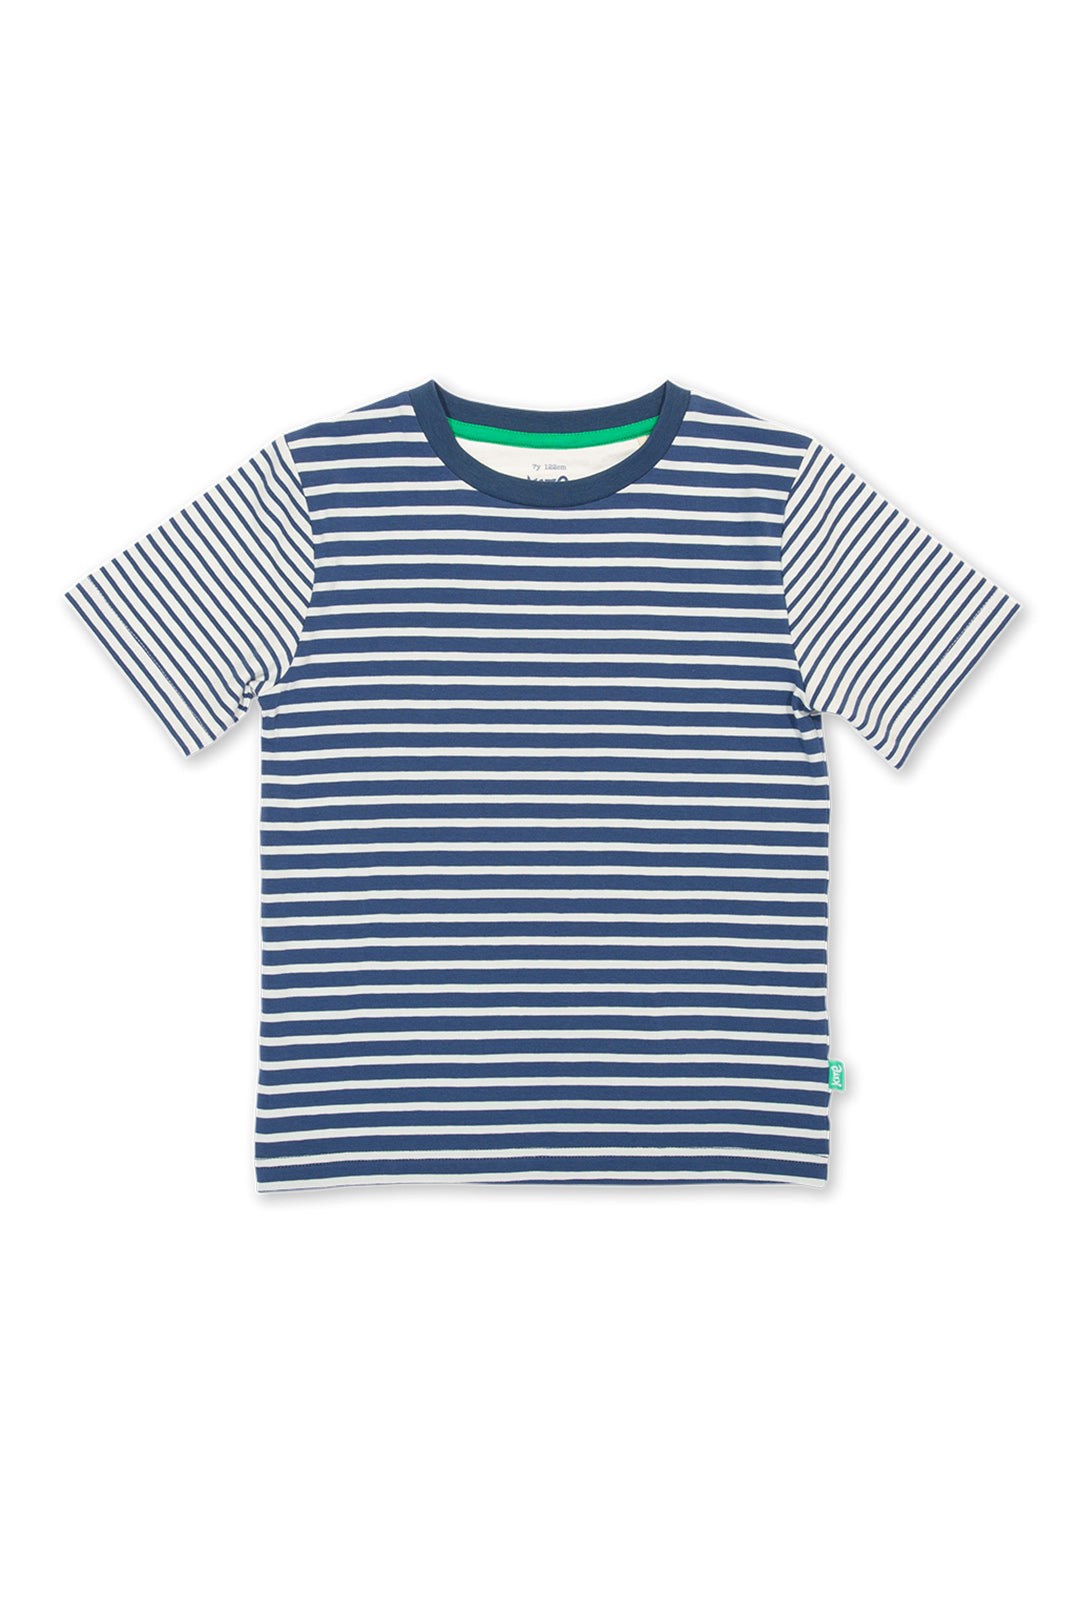 Stripy Baby/Kids Organic Cotton T-Shirt -